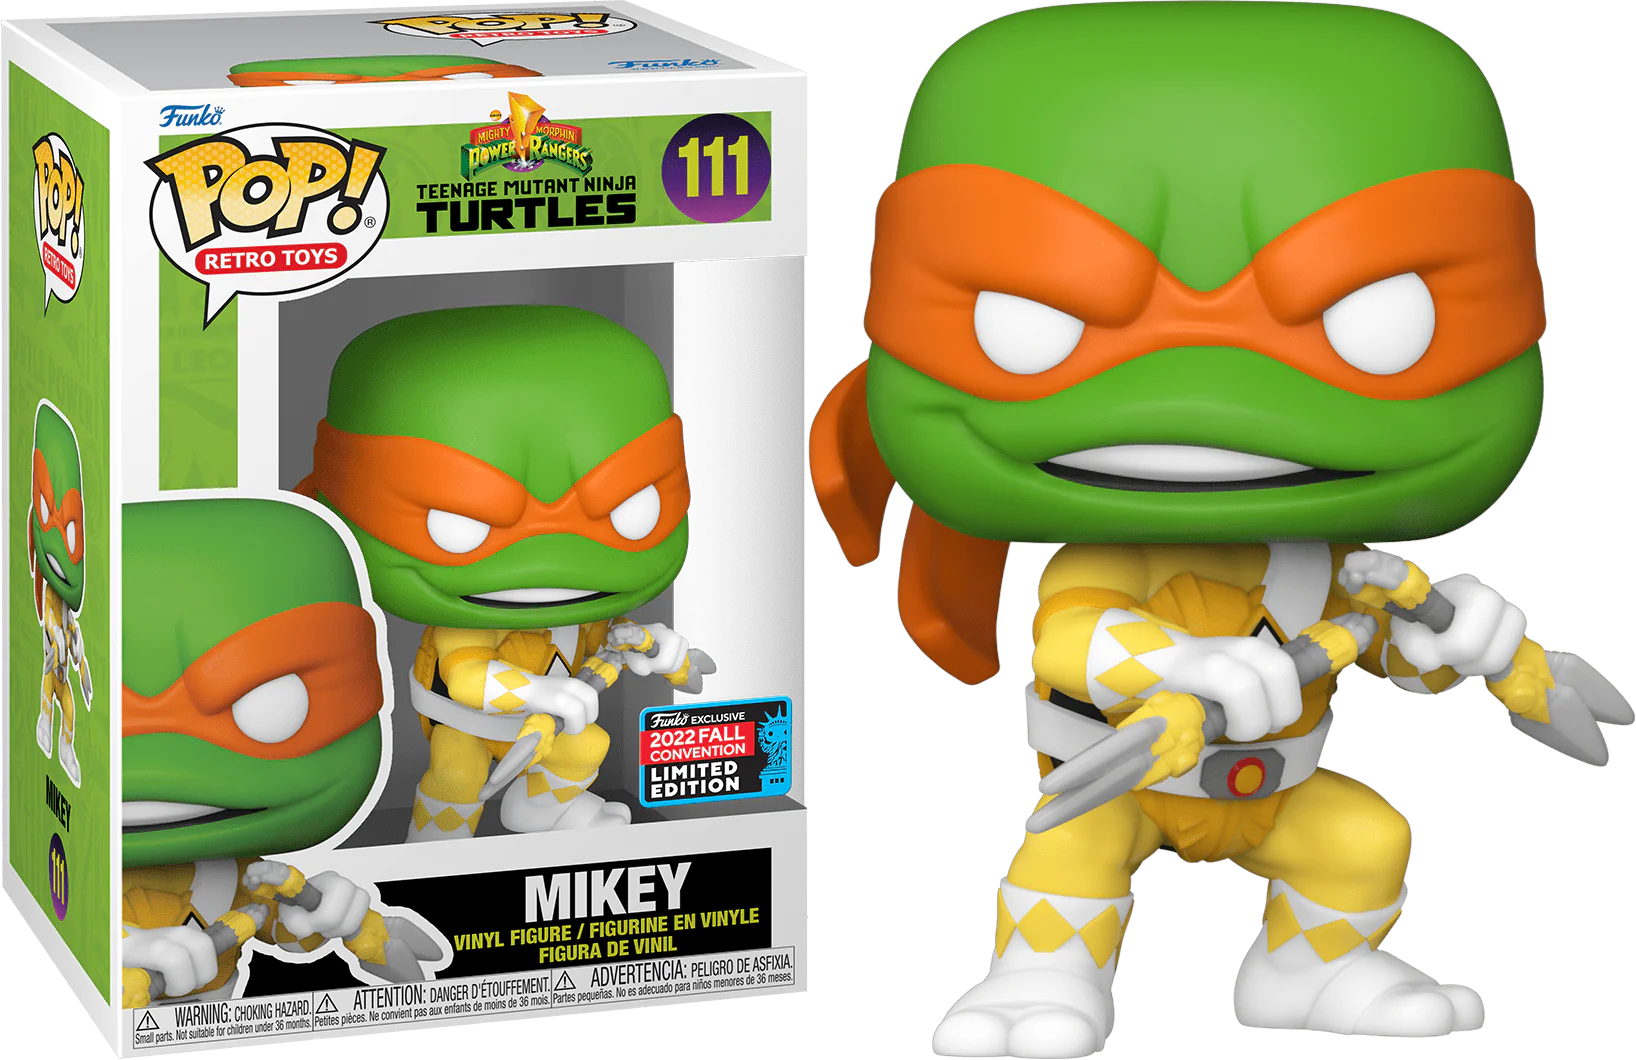 Funko Pop! - Mighty Morphin Power Ranger Teenage Mutant Ninja Turtles - Mikey 111